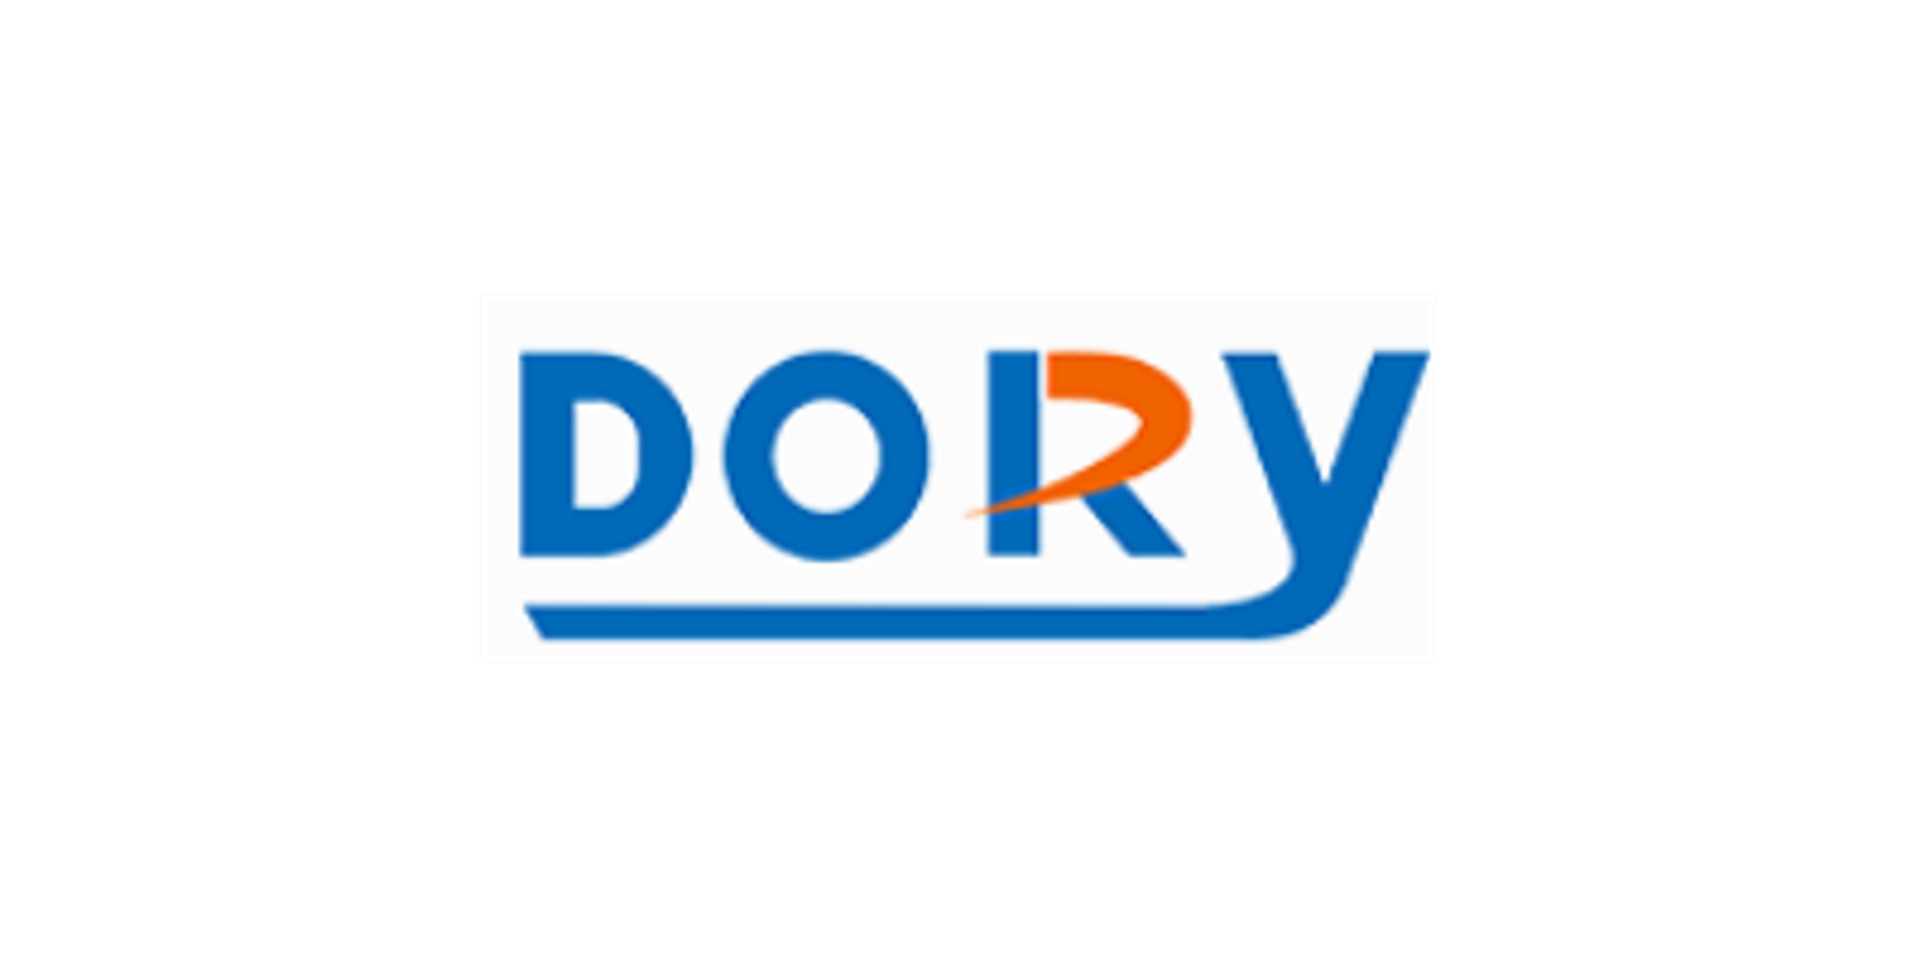 Dory Machinery Manufacture Co.,Ltd